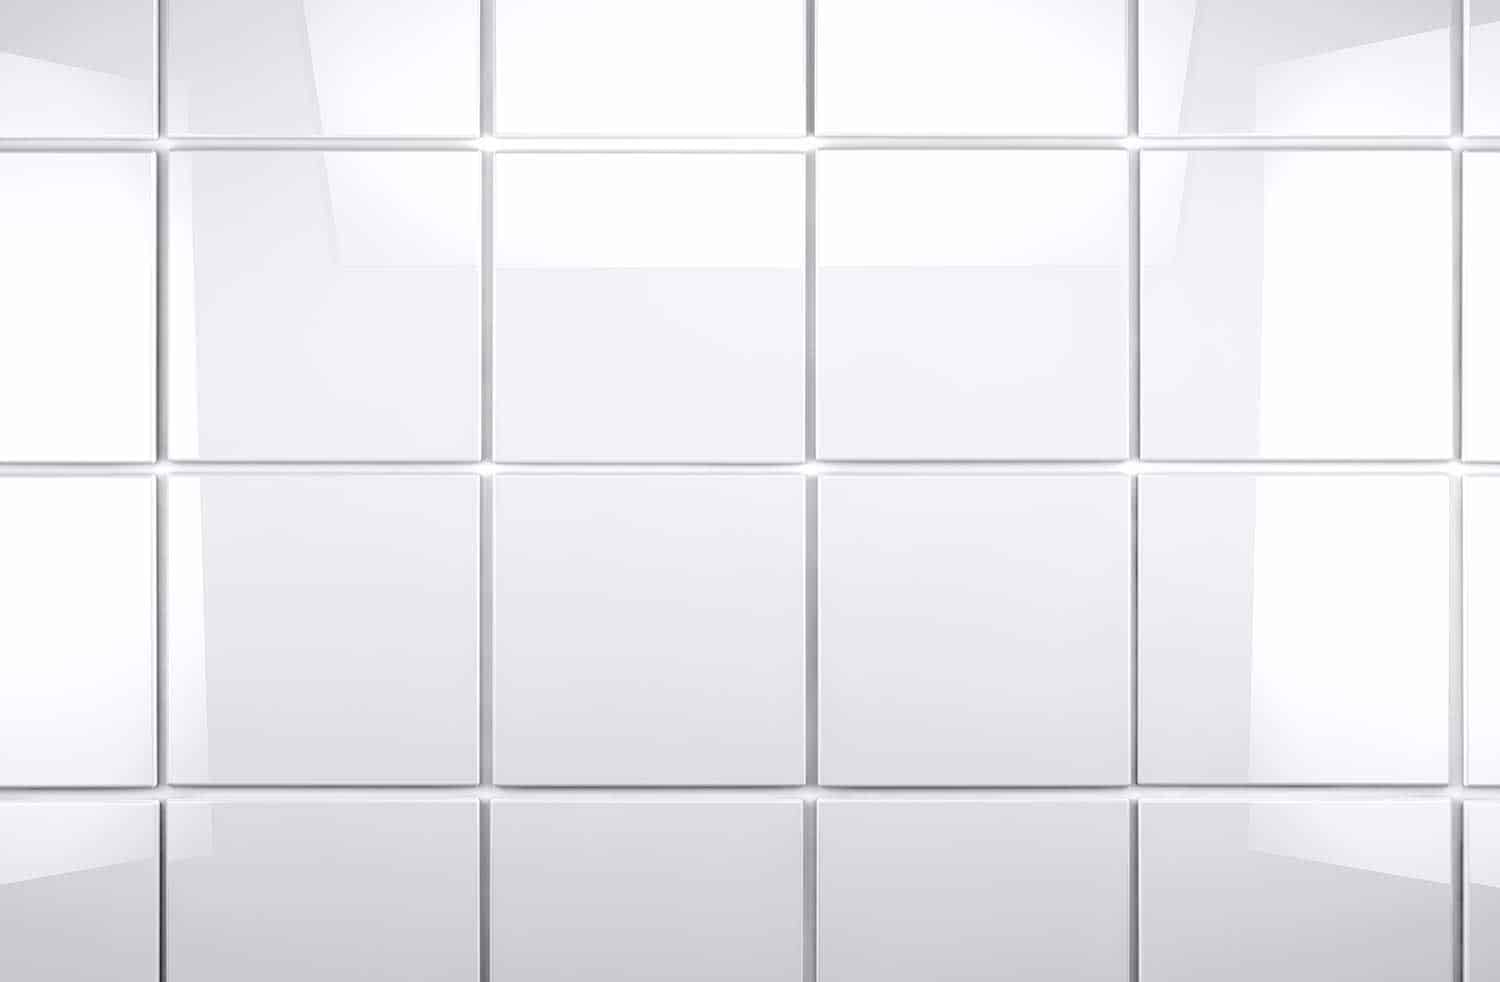 Tile wall of a bathroom